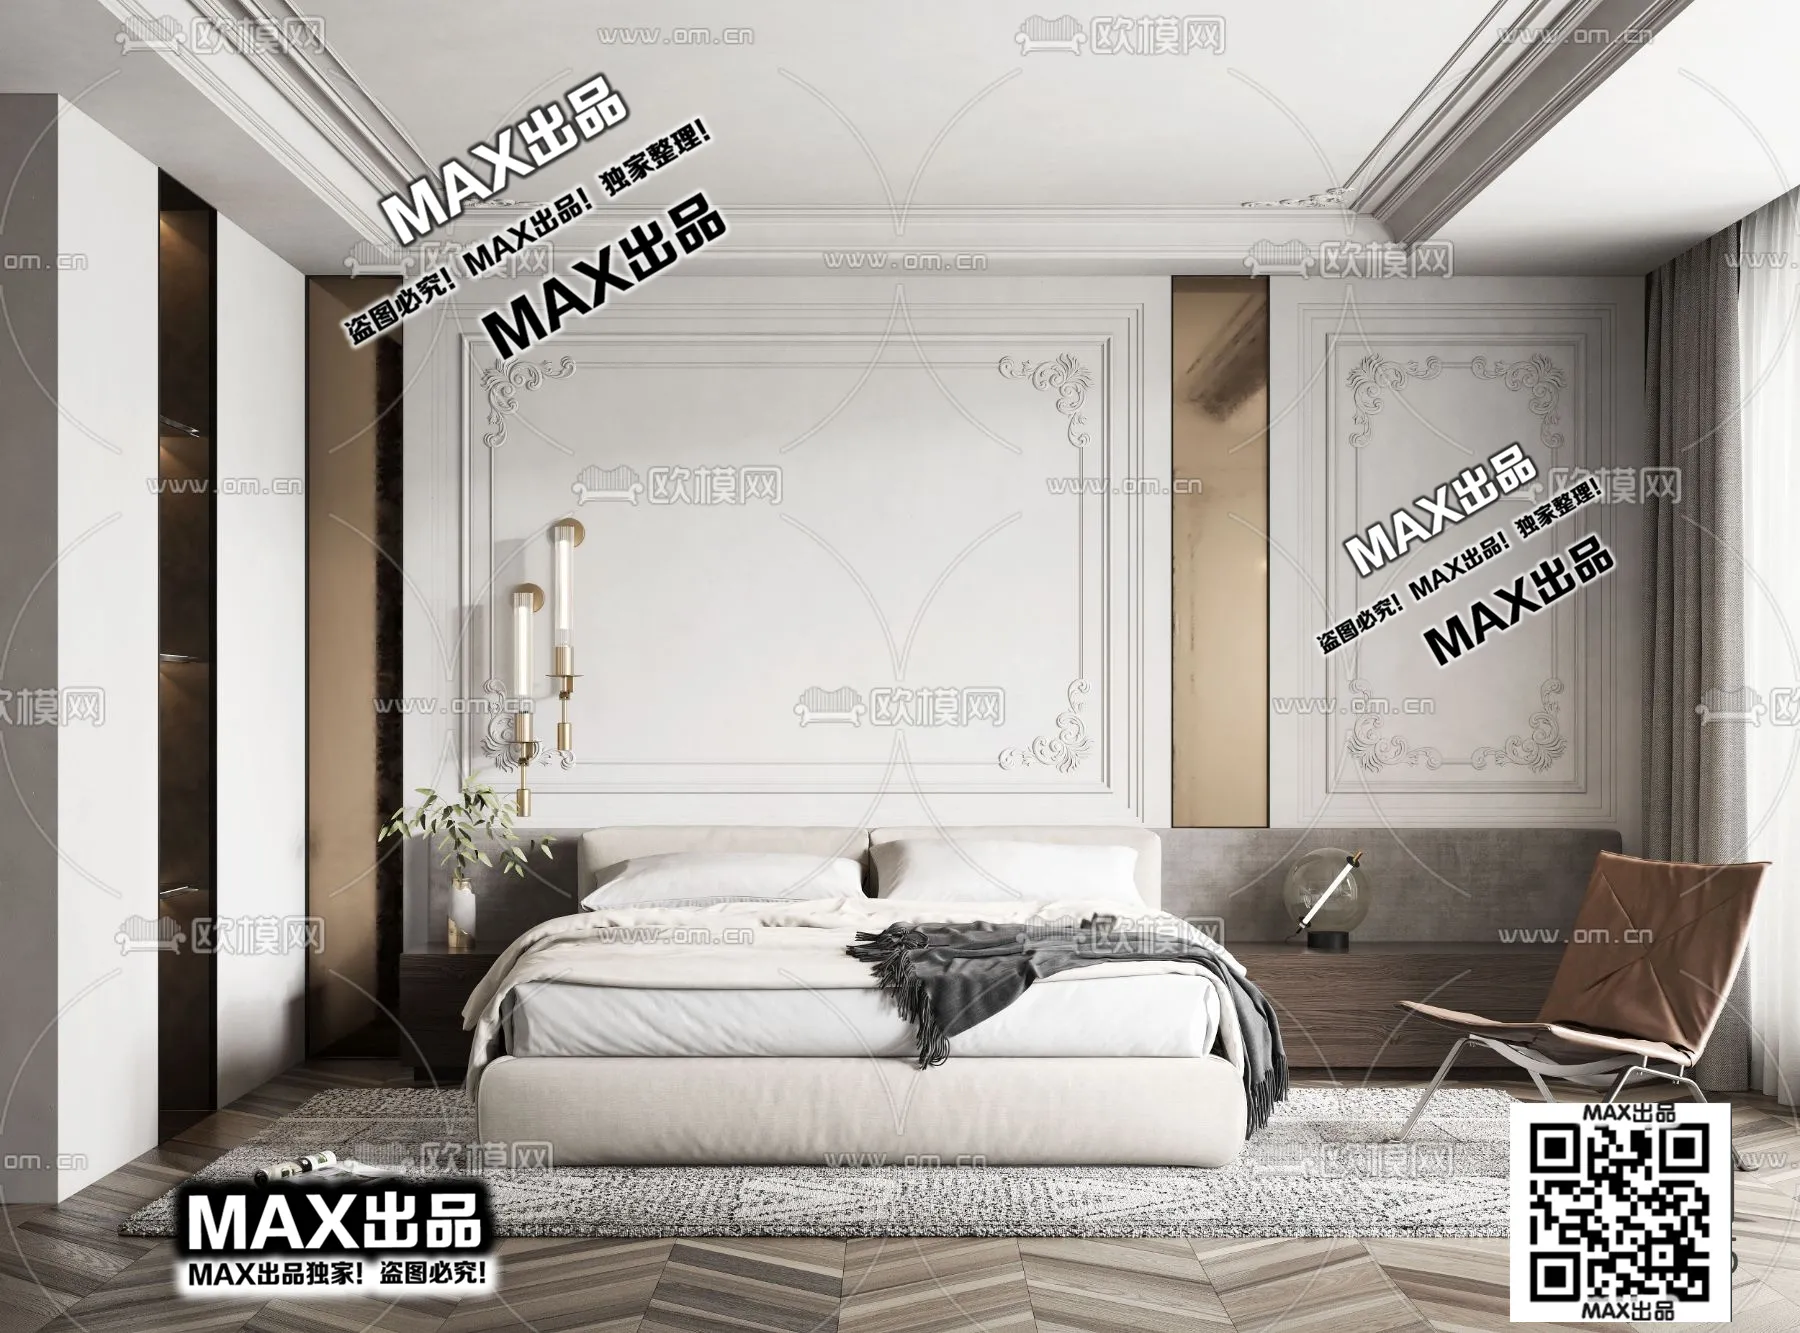 3DS MAX SCENES – LIVING ROOM – 176